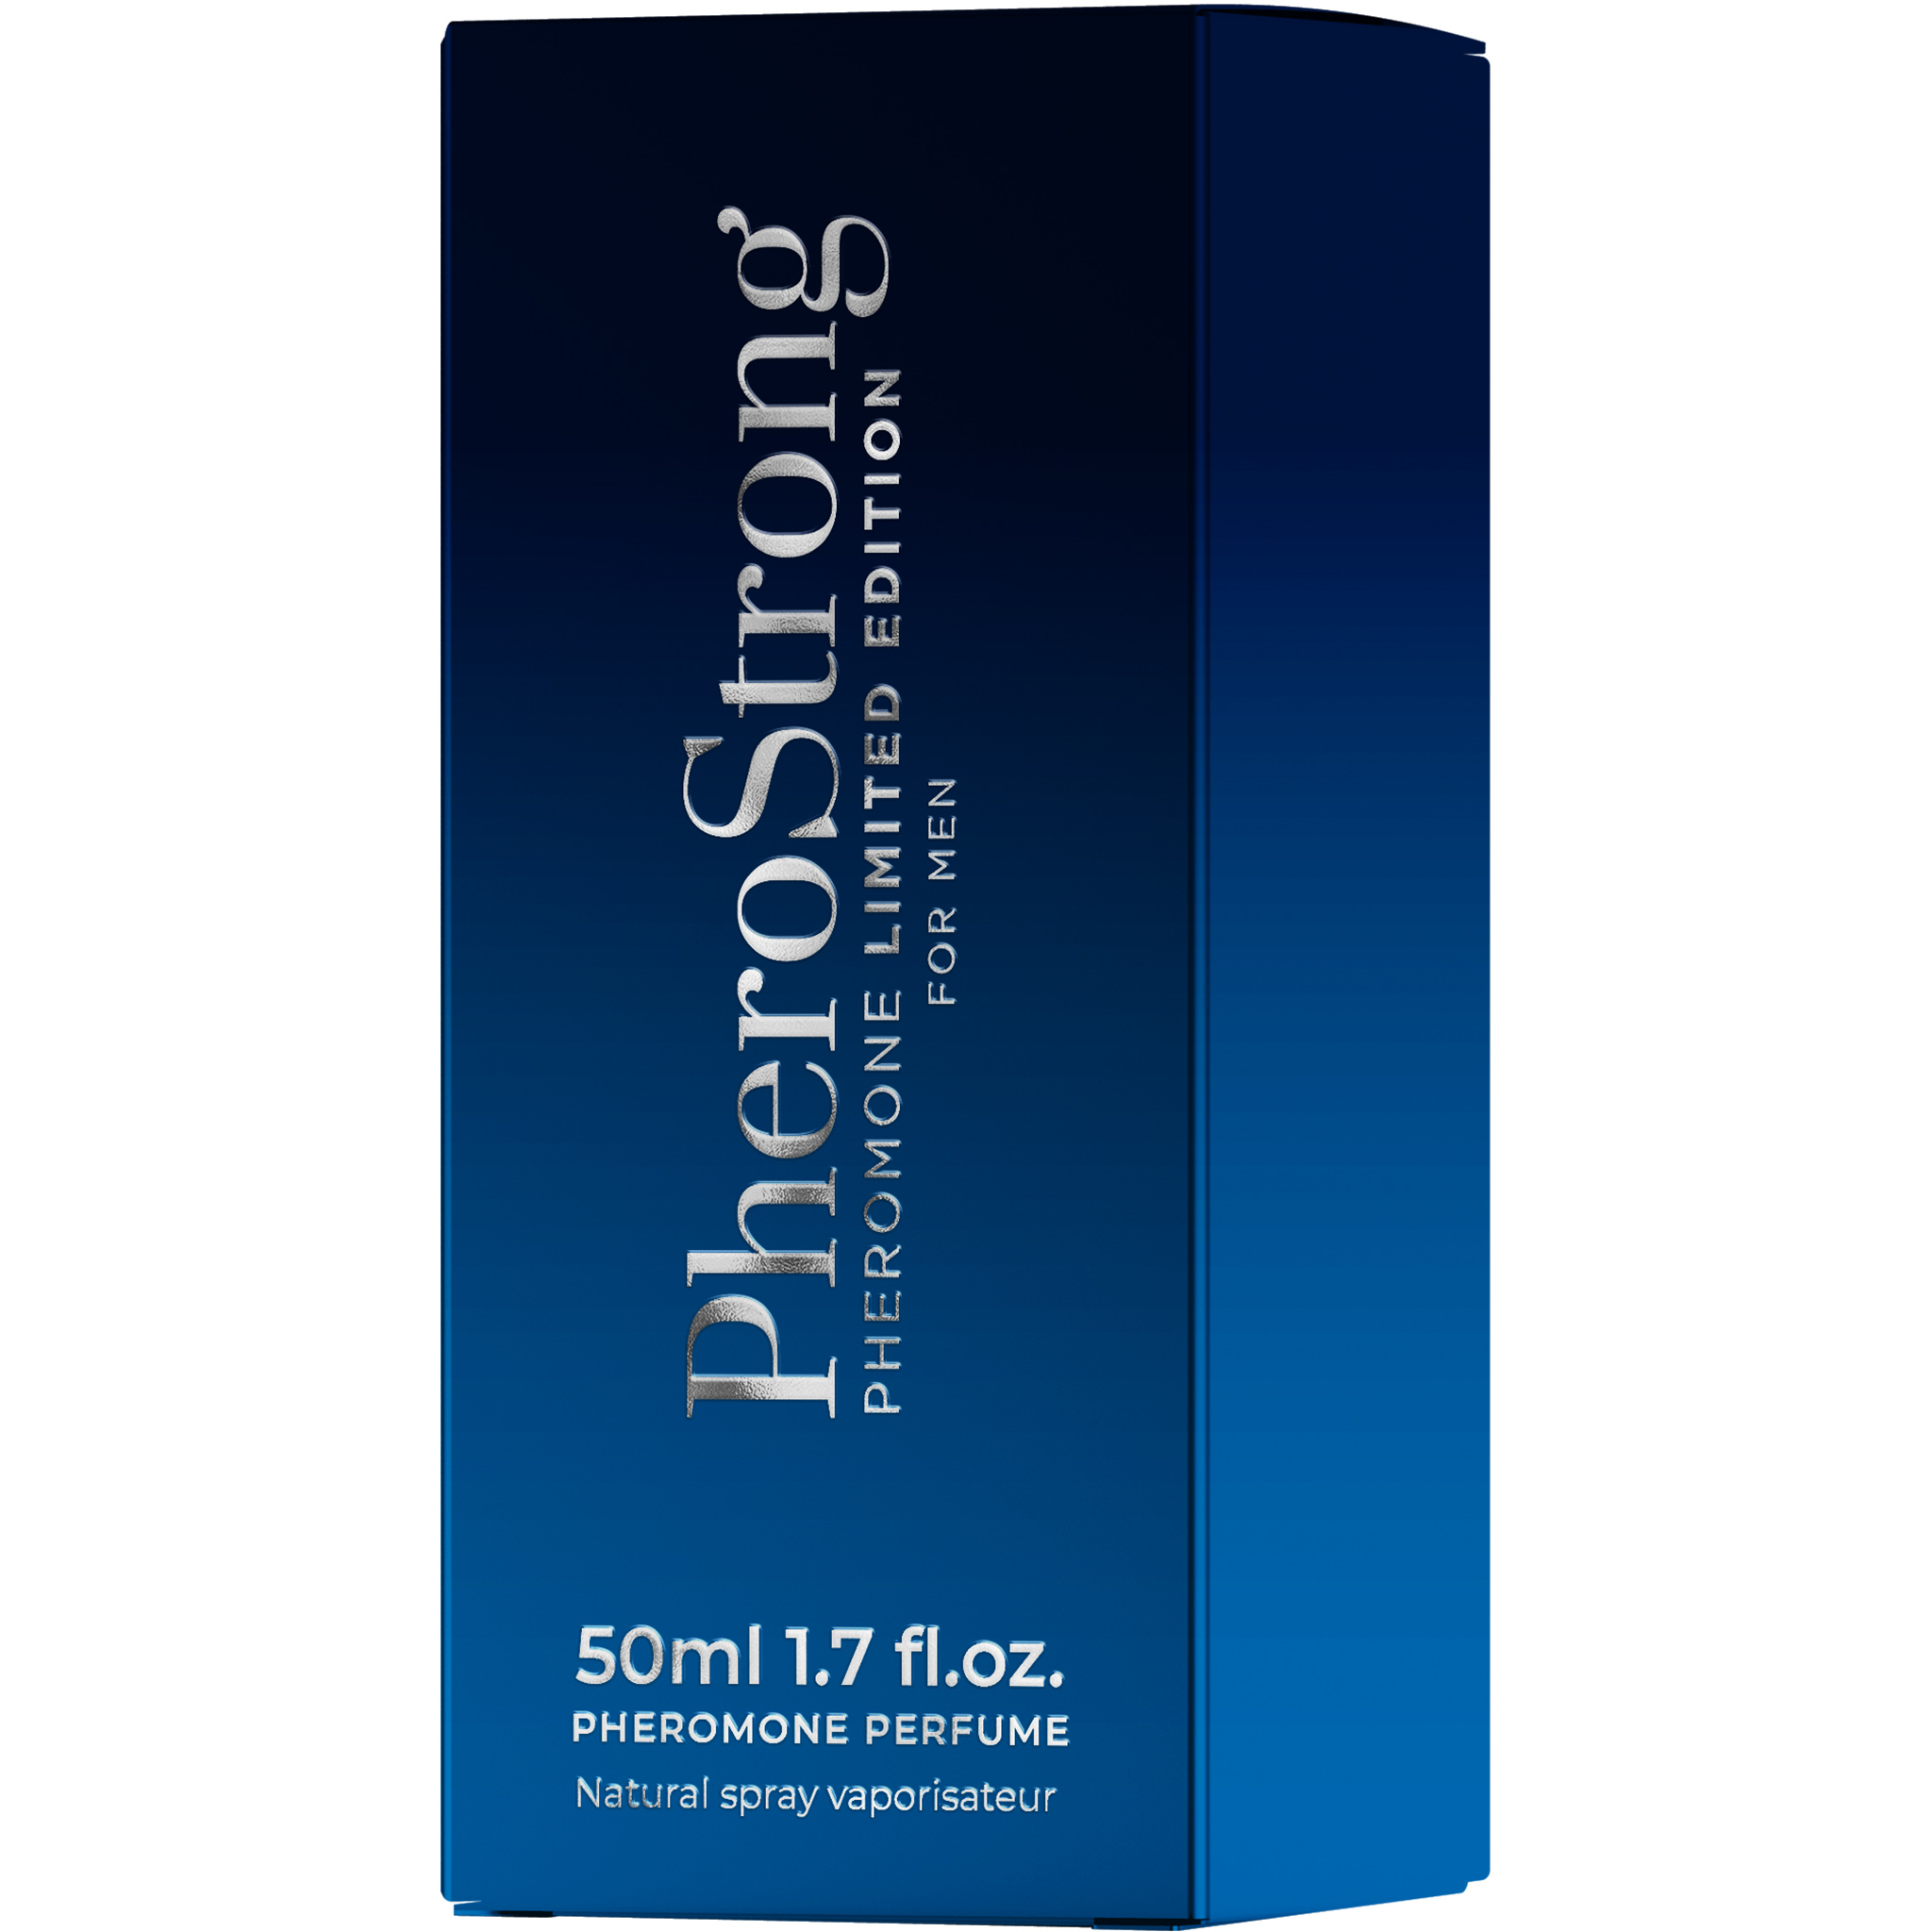 PheroStrong Pheromone Parfum Limited Edition for Men 50ml